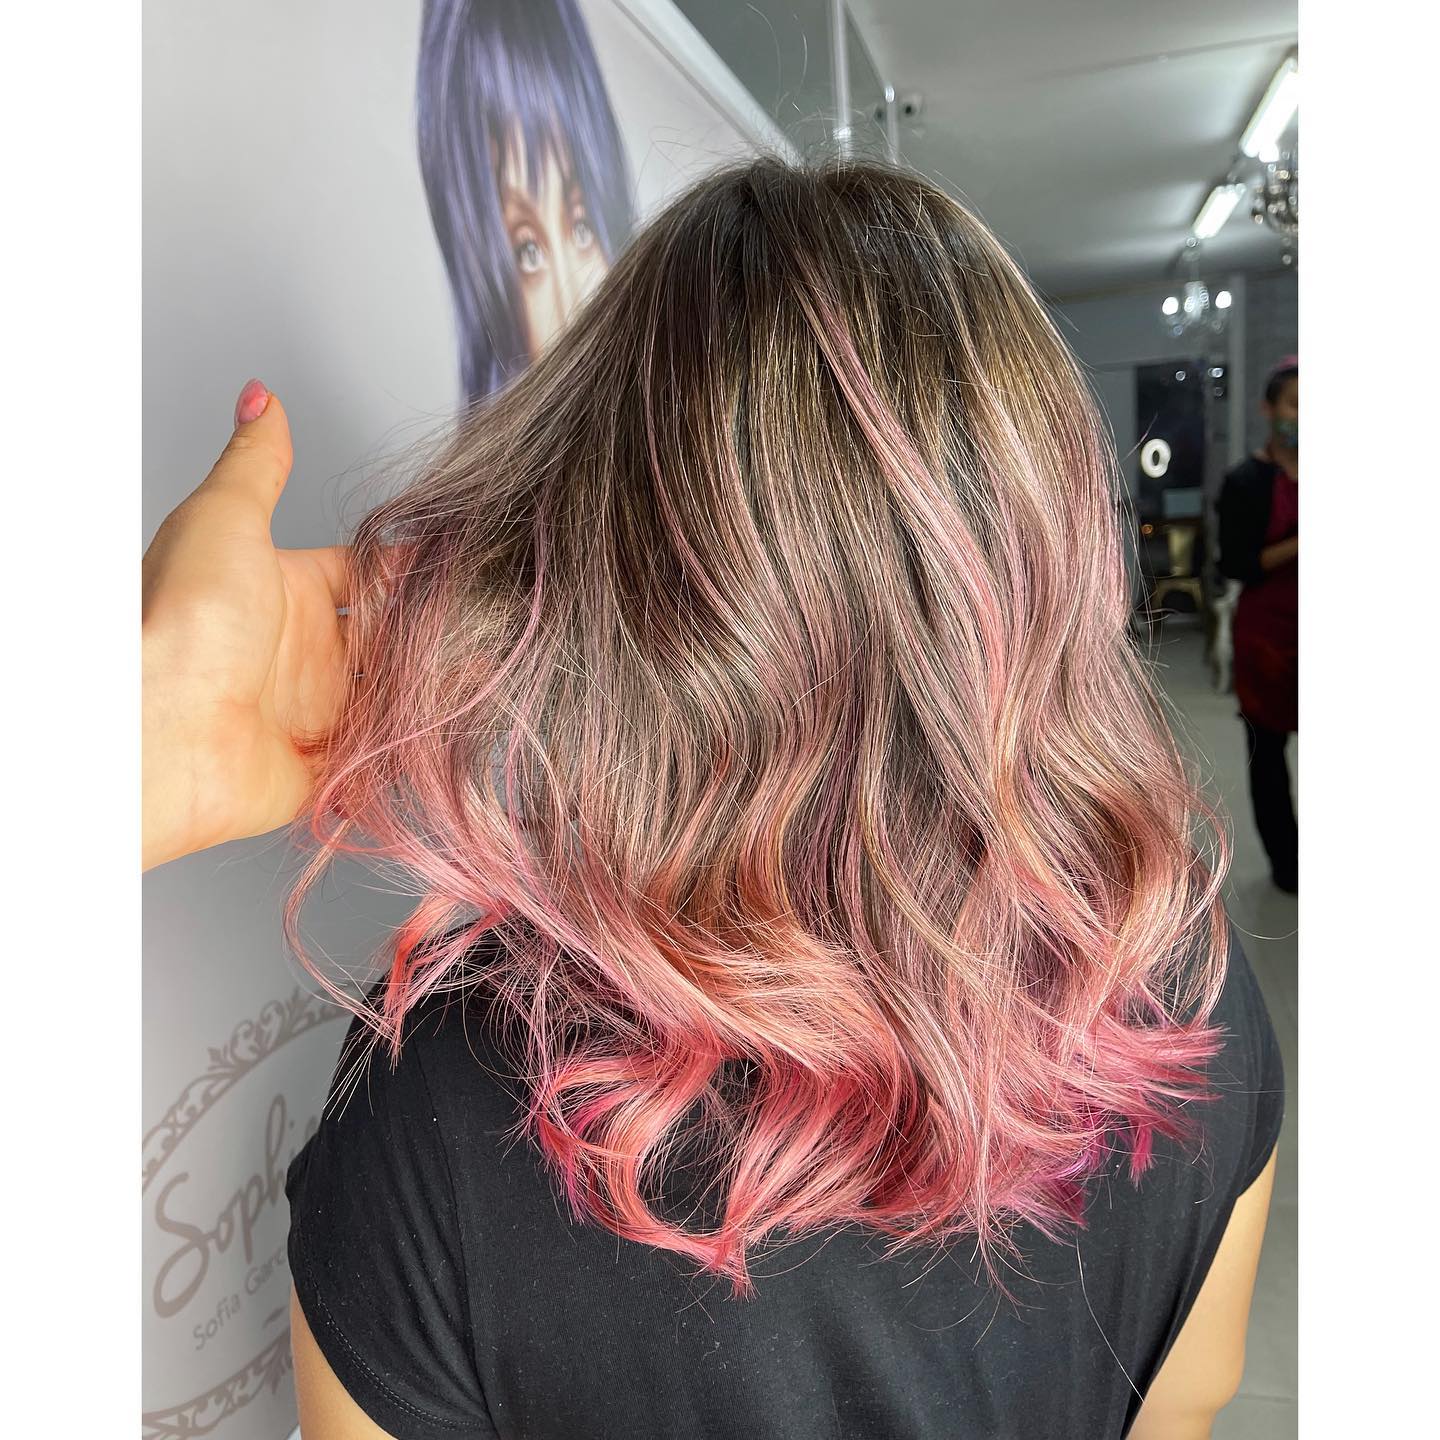 243523363 874619043172380 8897227945510960323 n - Ombré hair rosa: 60 inspirações, trends